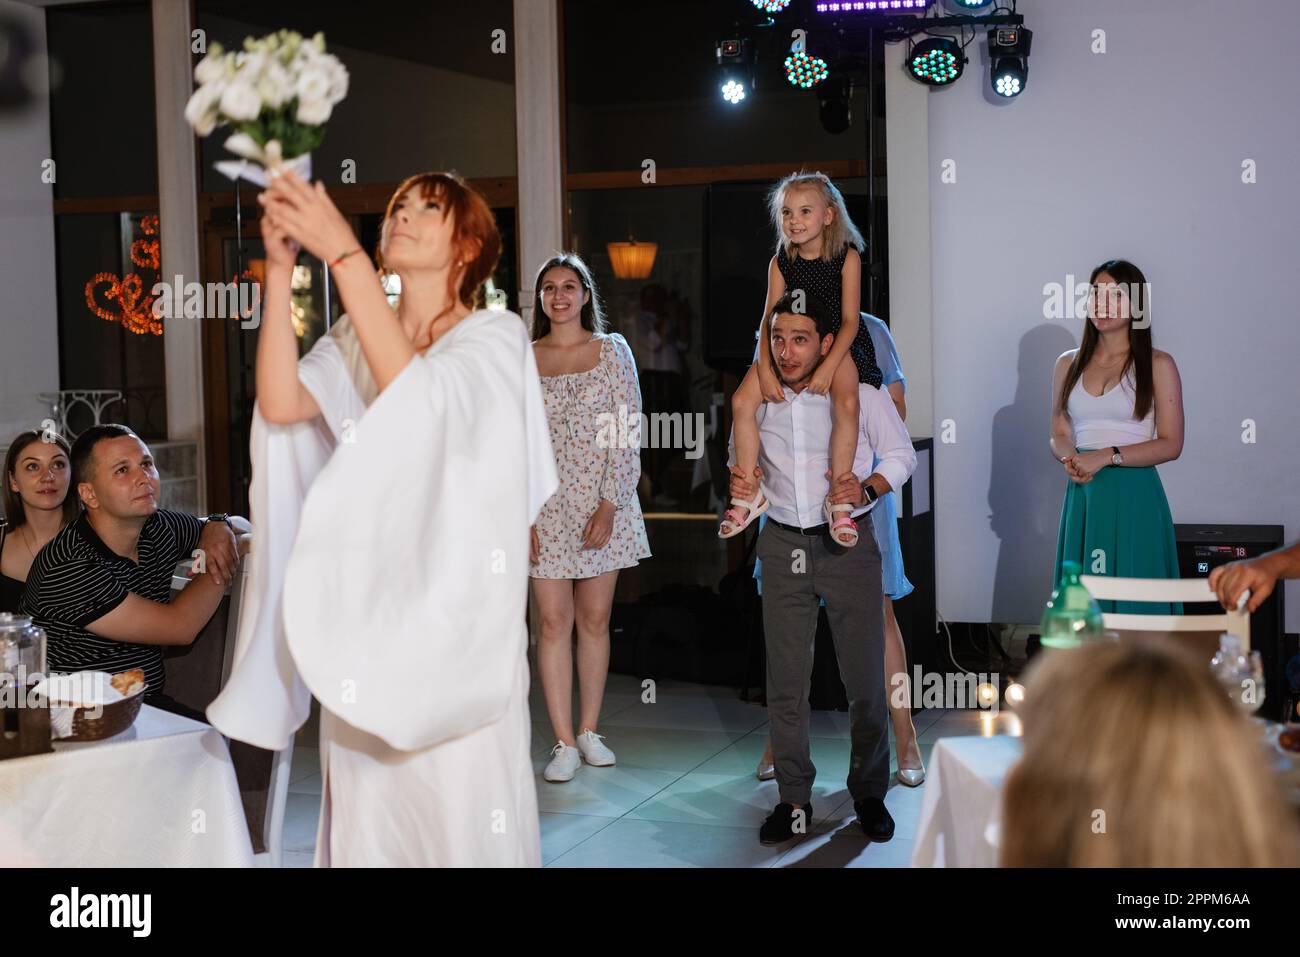 a bride in a white dress throws a wedding bouquet Stock Photo